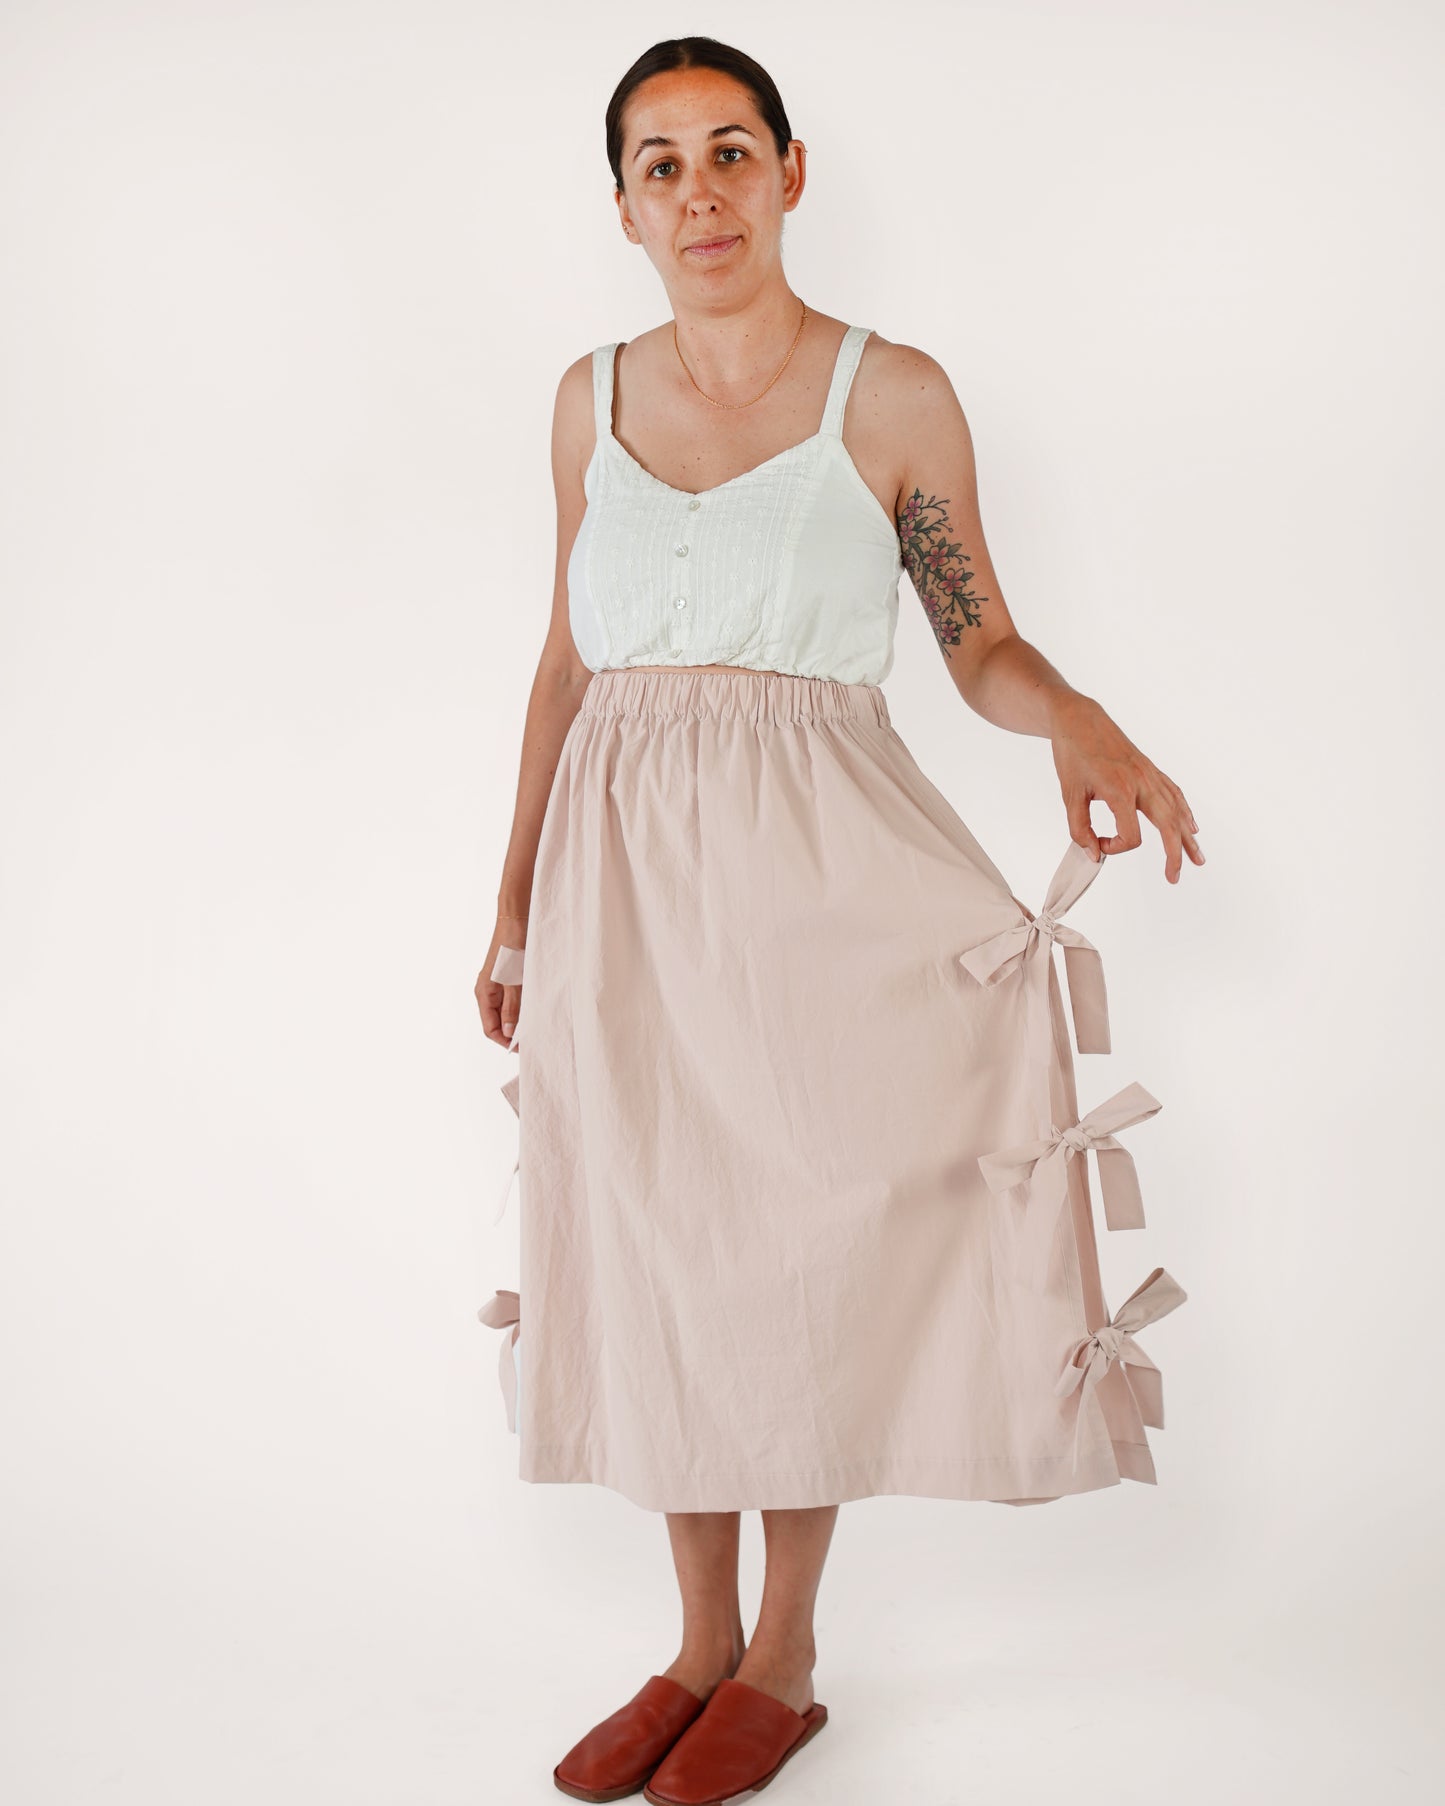 Ballet Bow Skirt PDF Sewing Pattern • FREE